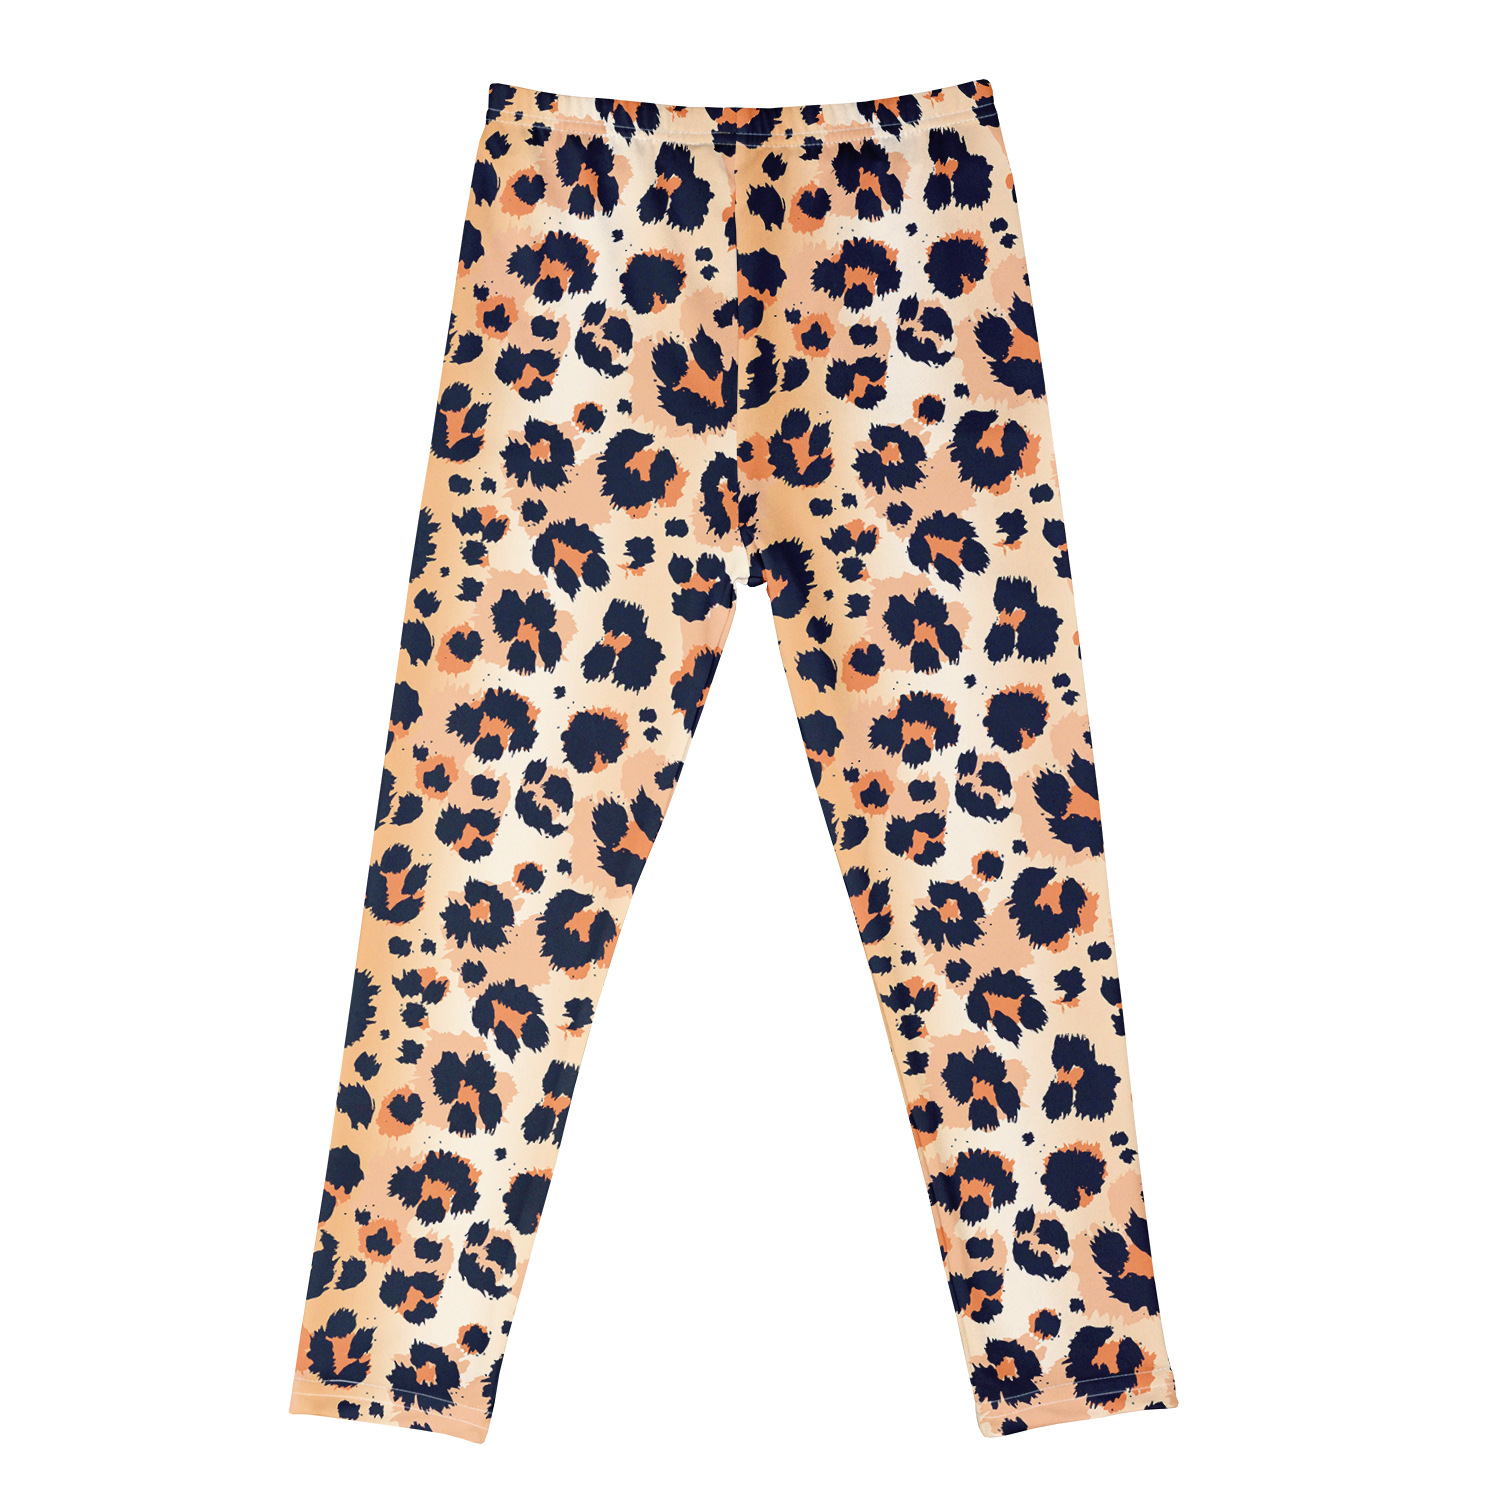 Esaierr Toddler Kids Leopard Printing Leggings for Girls Section Tight ...